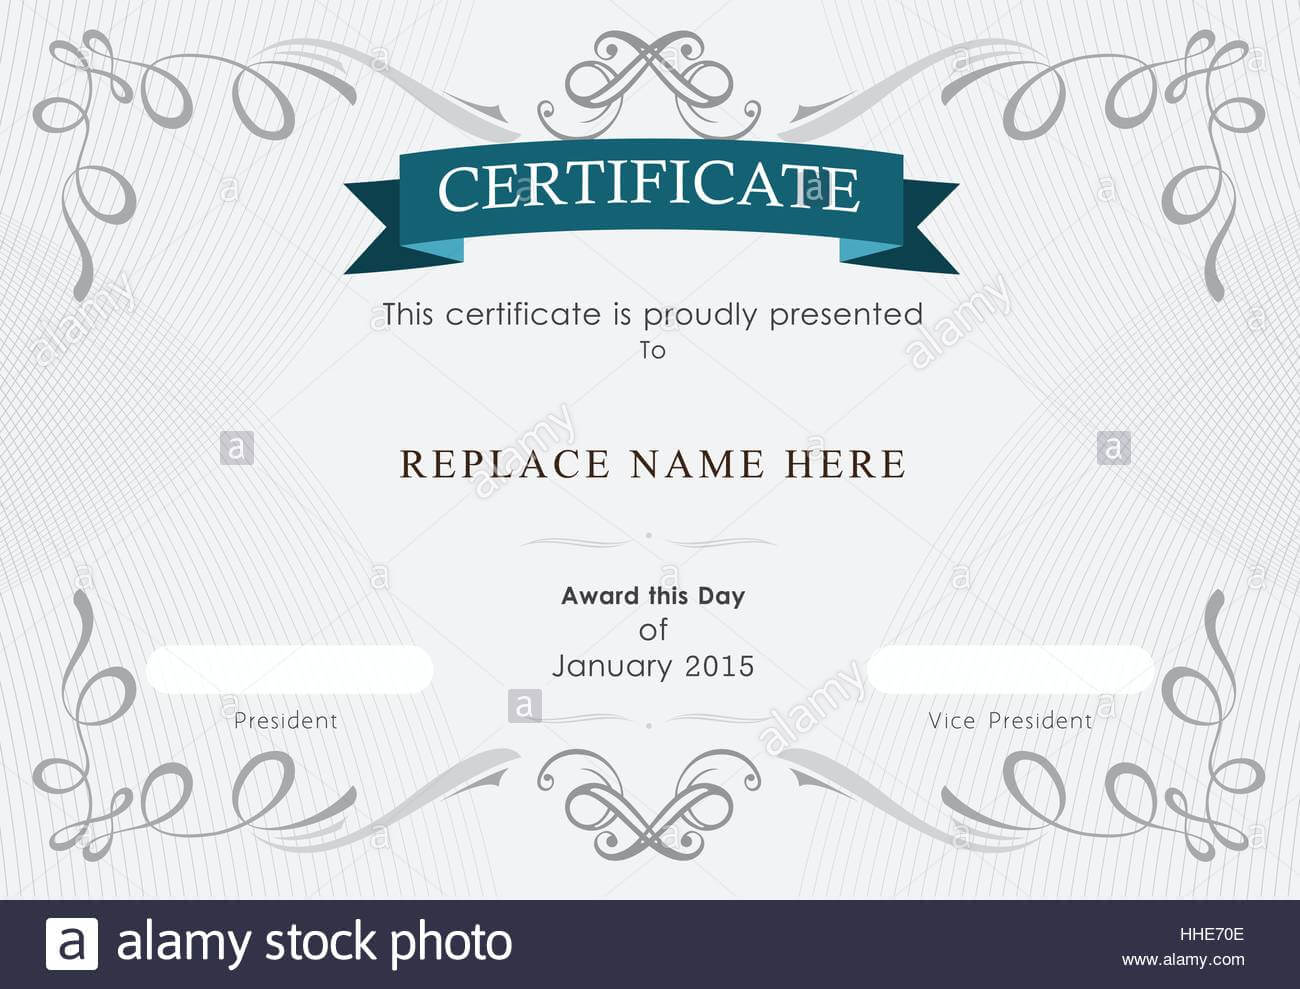 Certificate Border Stock Photos & Certificate Border Stock Intended For Landscape Certificate Templates